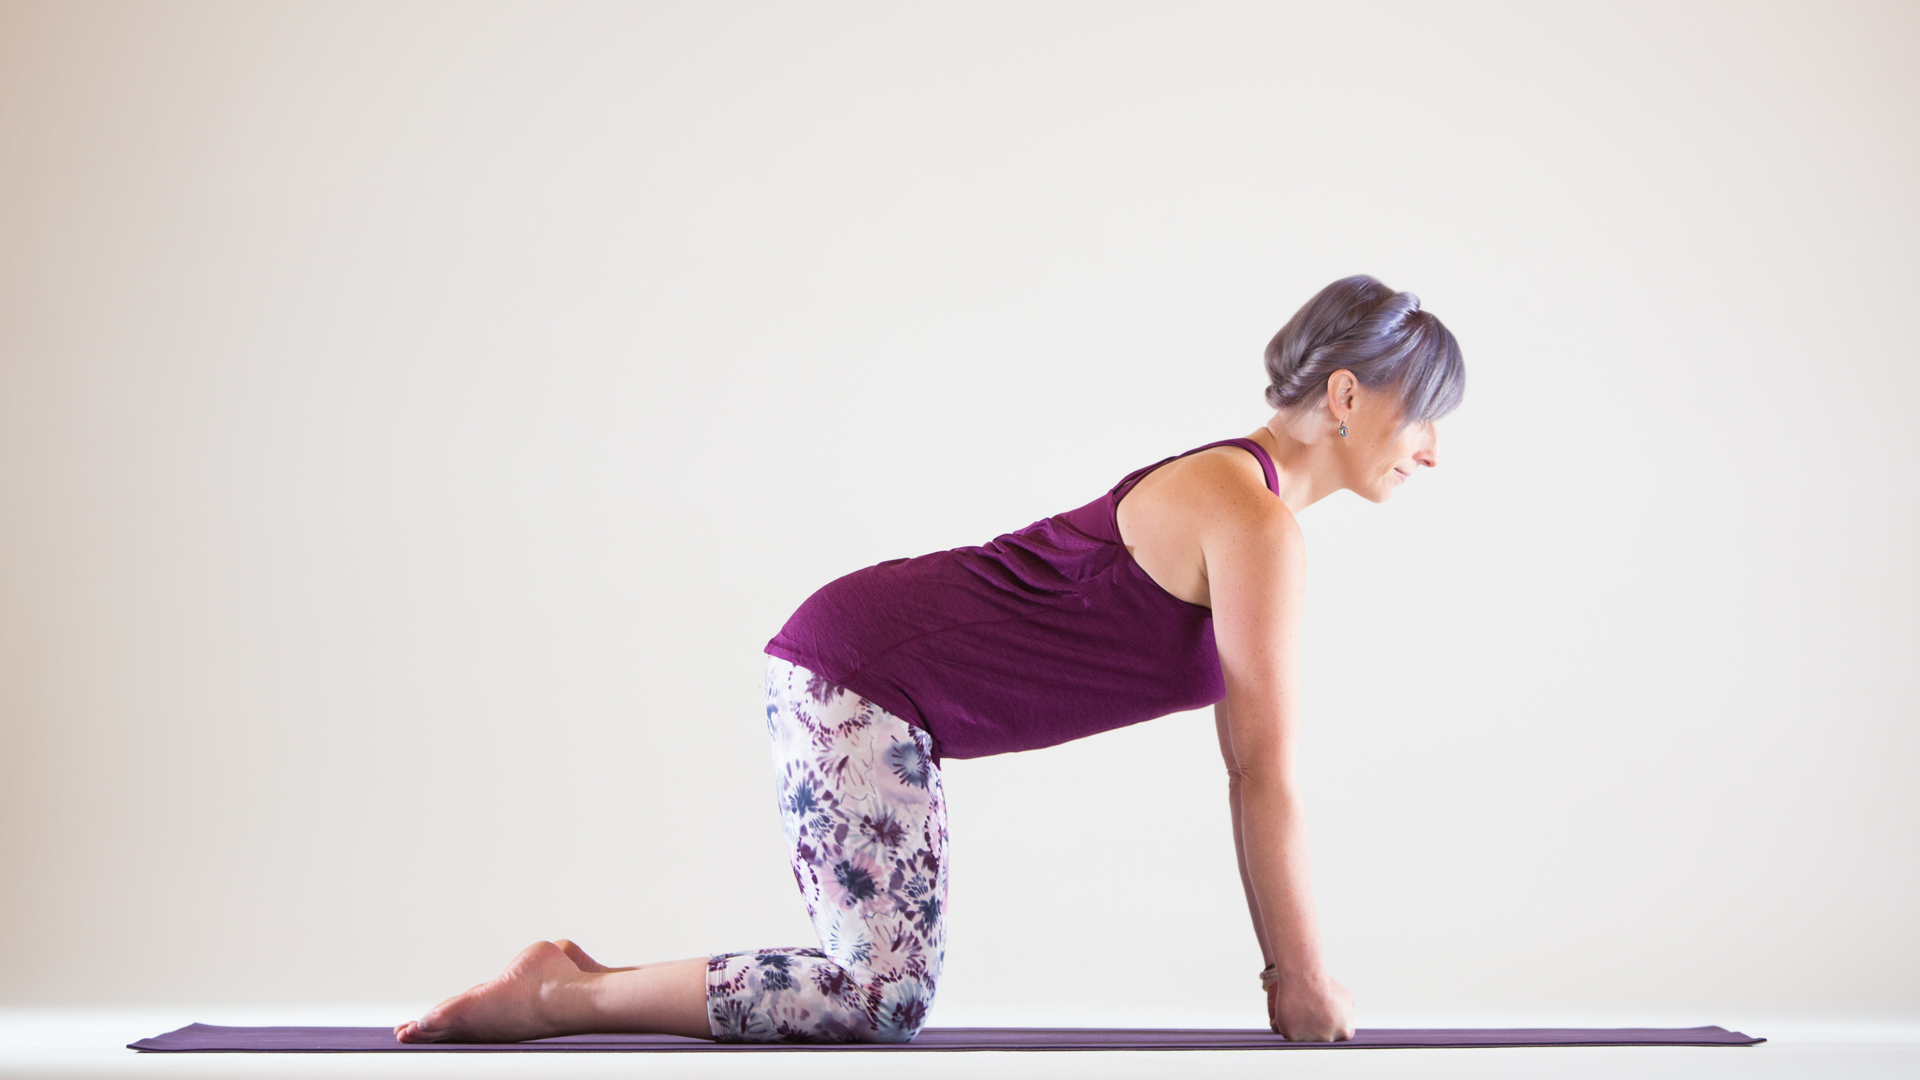 Yoga Poses for Beginners - ClassPass Blog